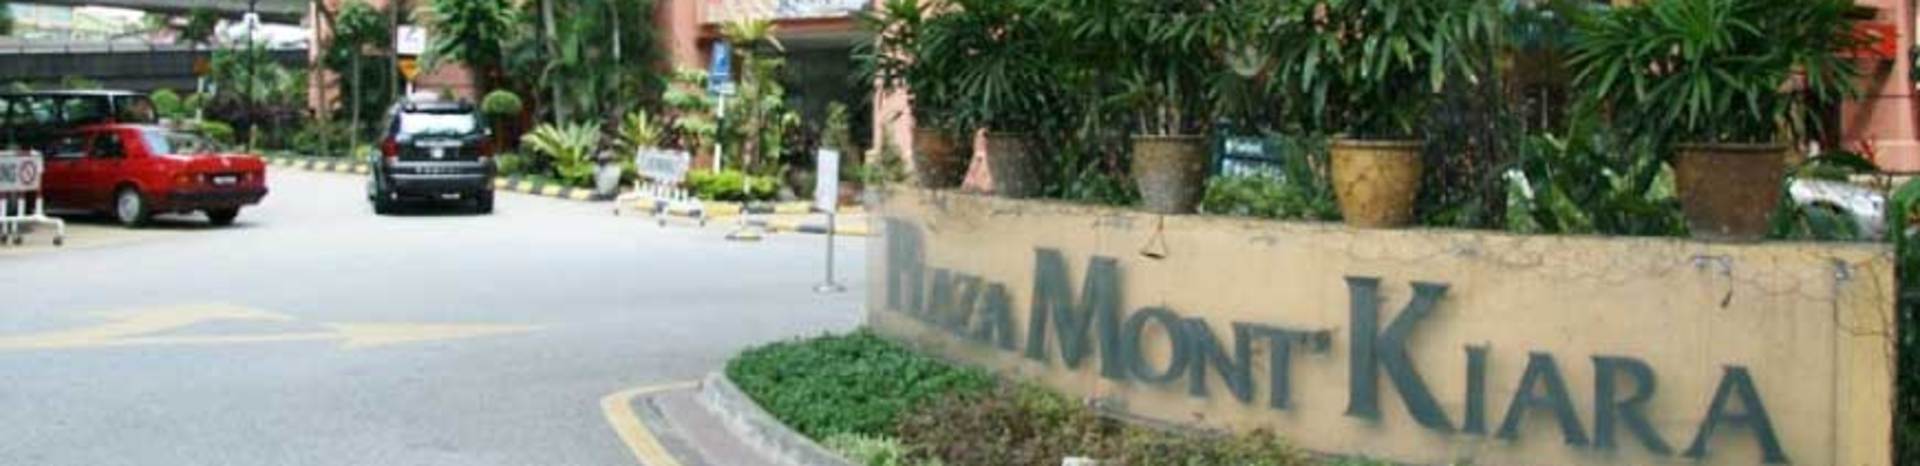 Plaza Mont Kiara Office Suites Ready To Occupied Kuala Lumpur